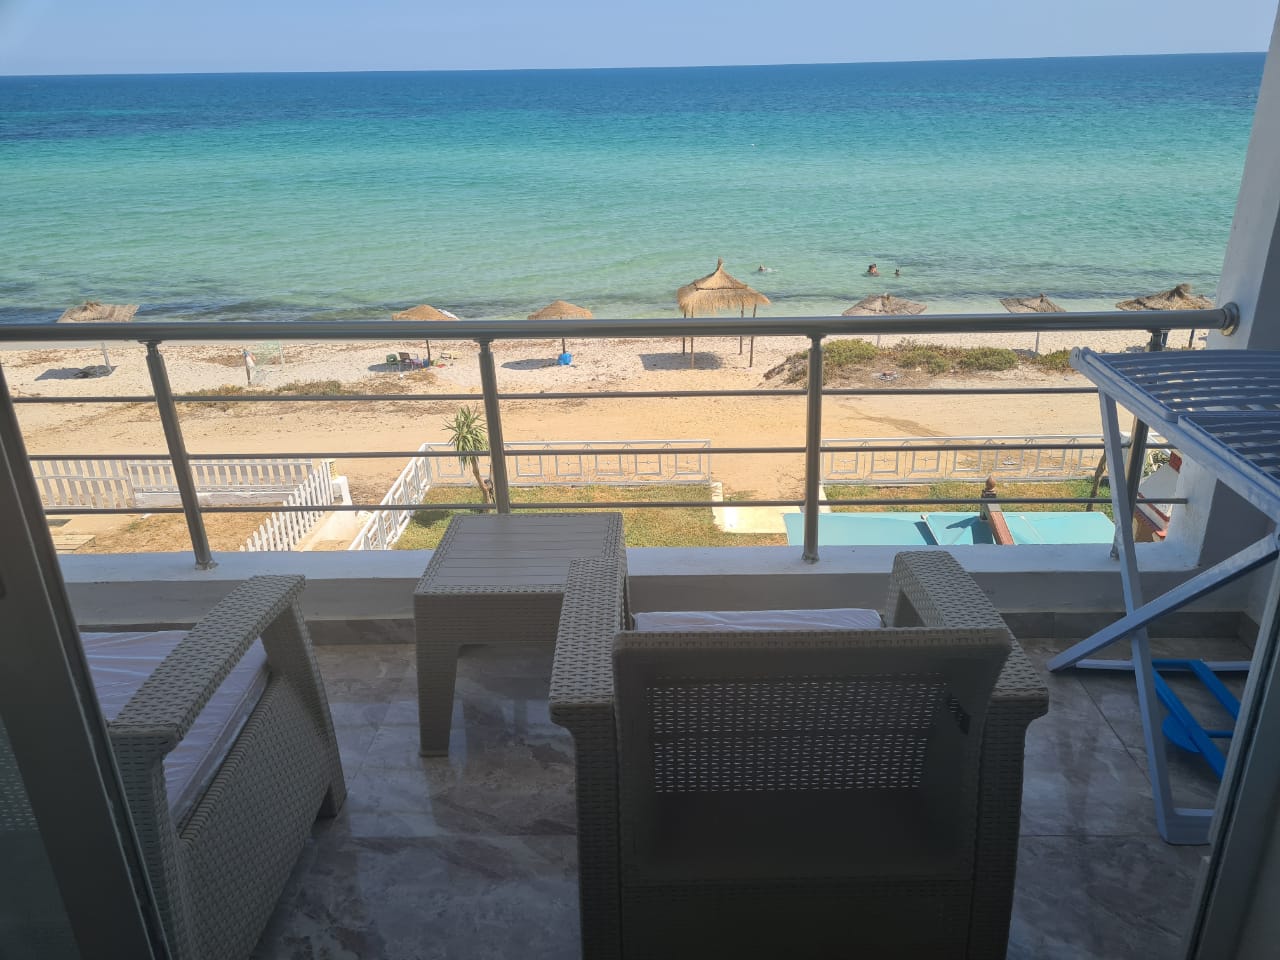 Kelibia Kelibia Location vacances Maisons Des villas de vacance  kelibia plage